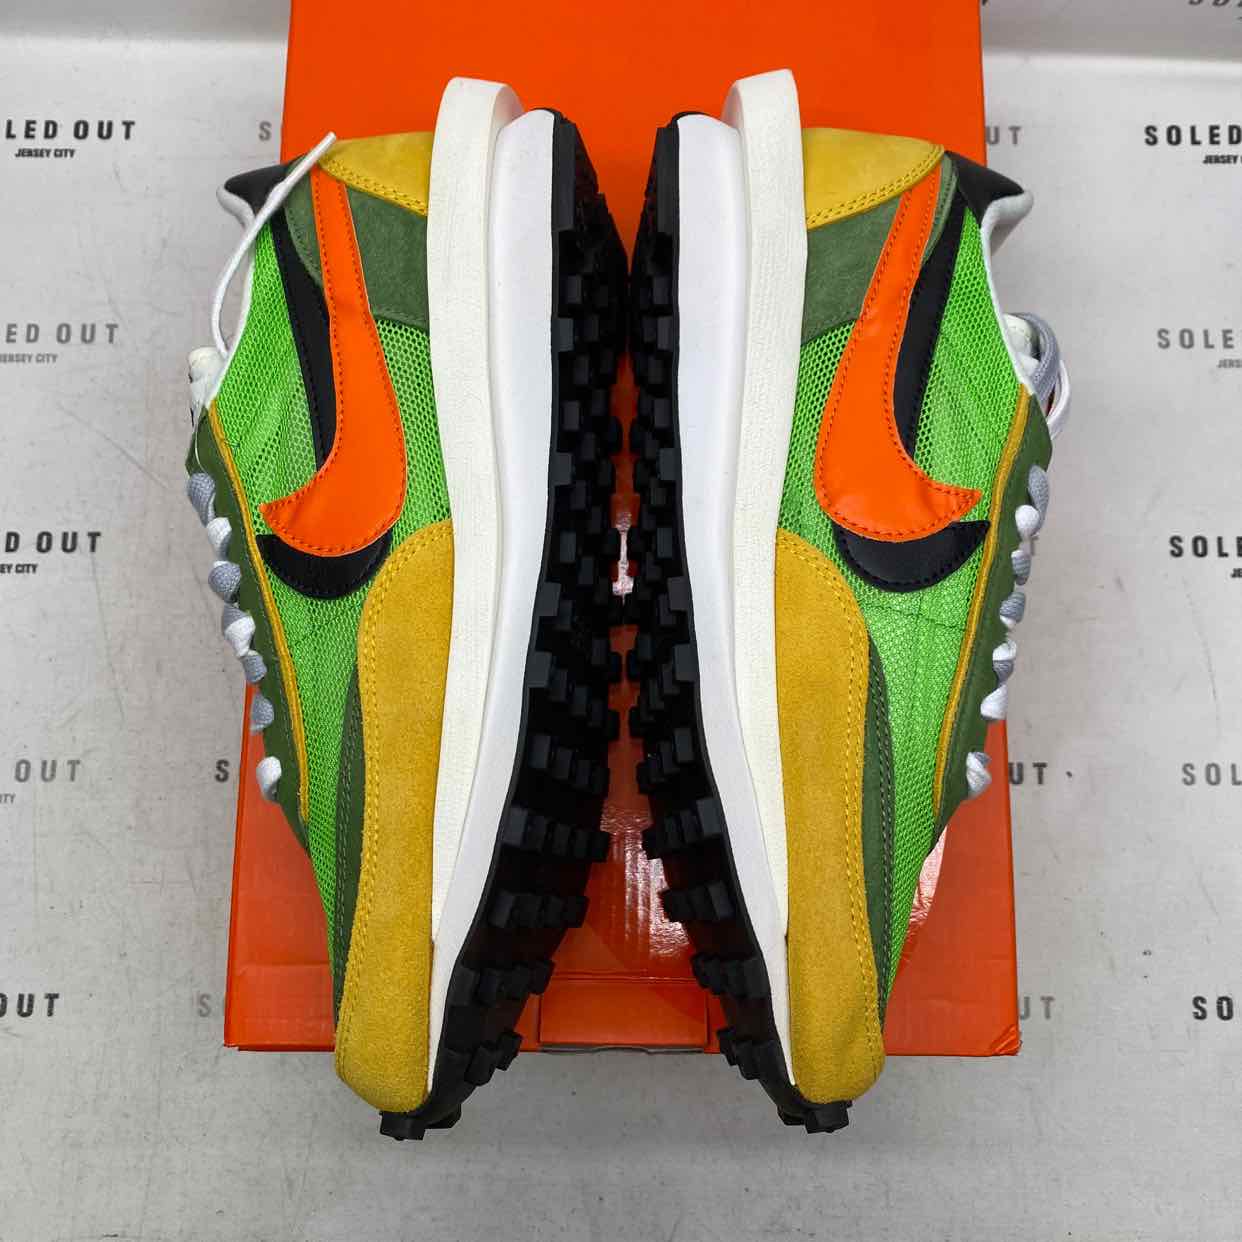 Nike LD WAFFLE / Sacai &quot;Pine Green&quot; 2019 New Size 9.5